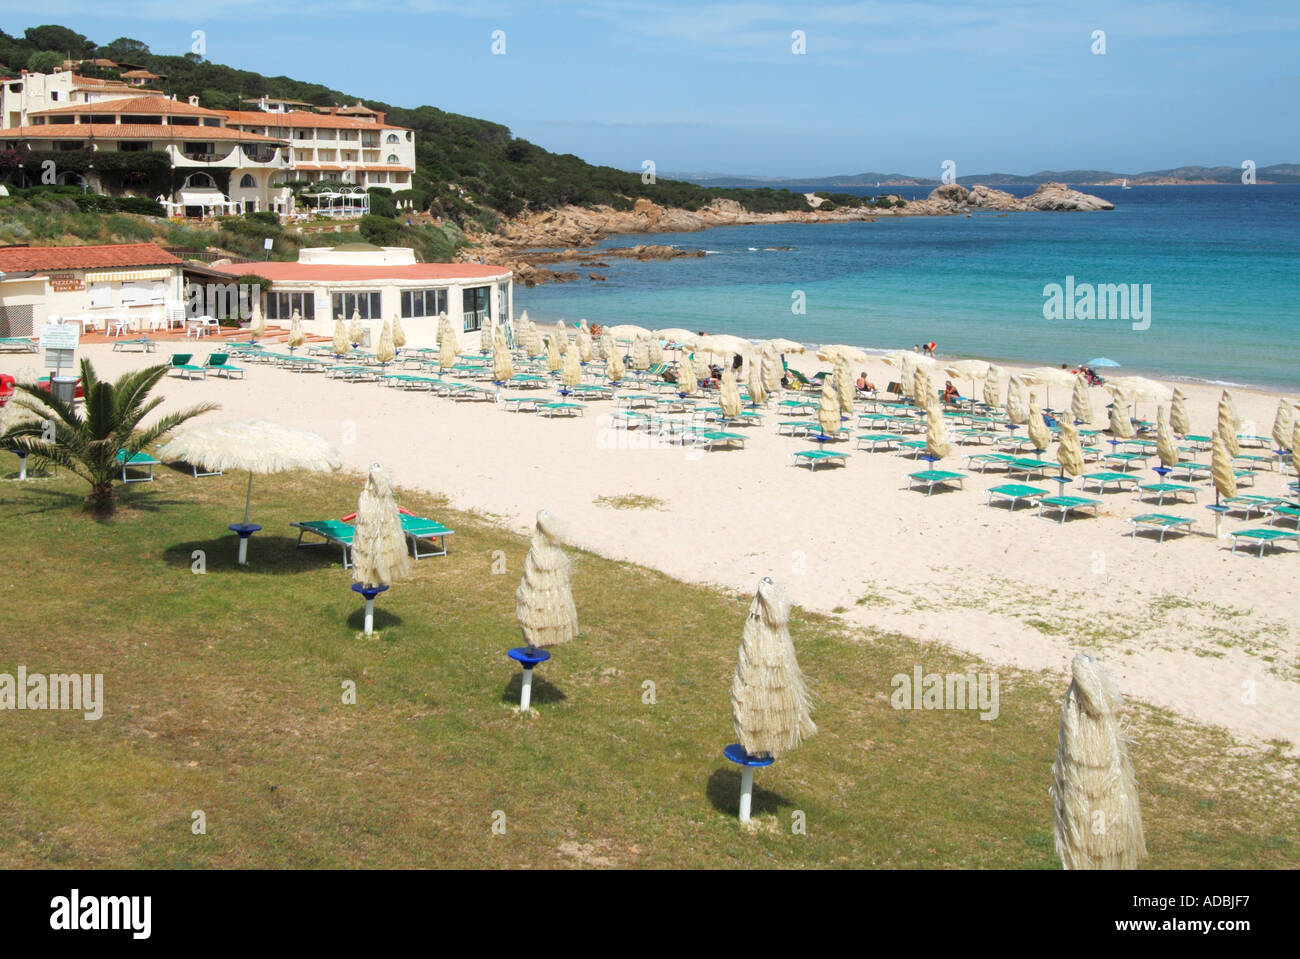 Baia Sardinia piccola stazione balneare moderna spiaggia Foto Stock